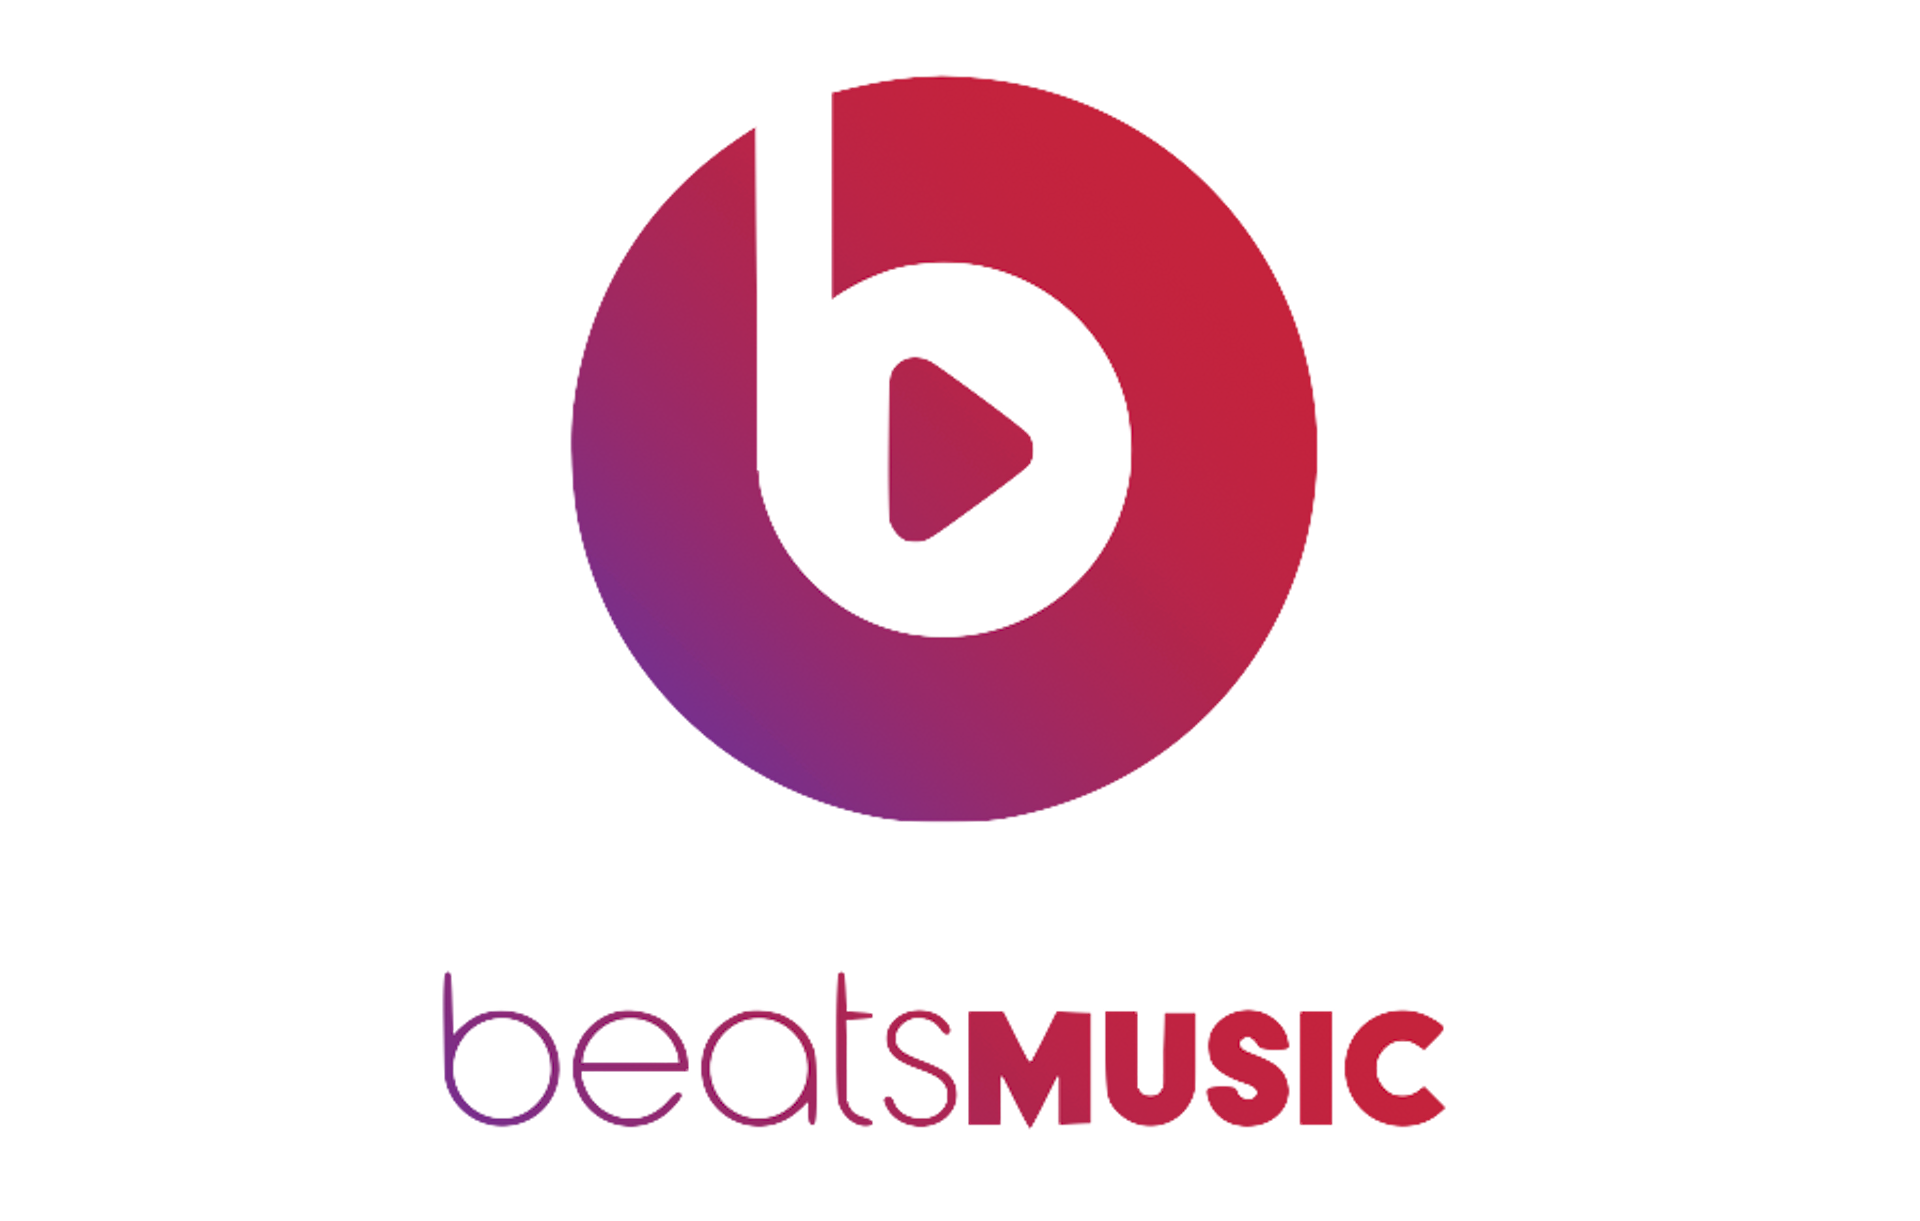 Beats By Dre - Beats Audio Lo